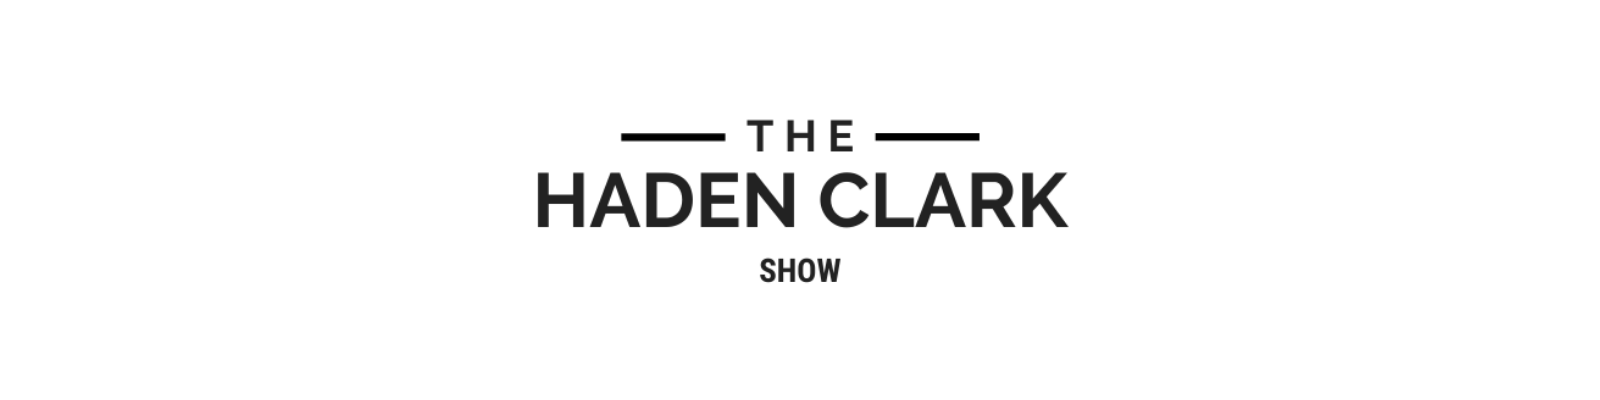 The Haden Clark Show